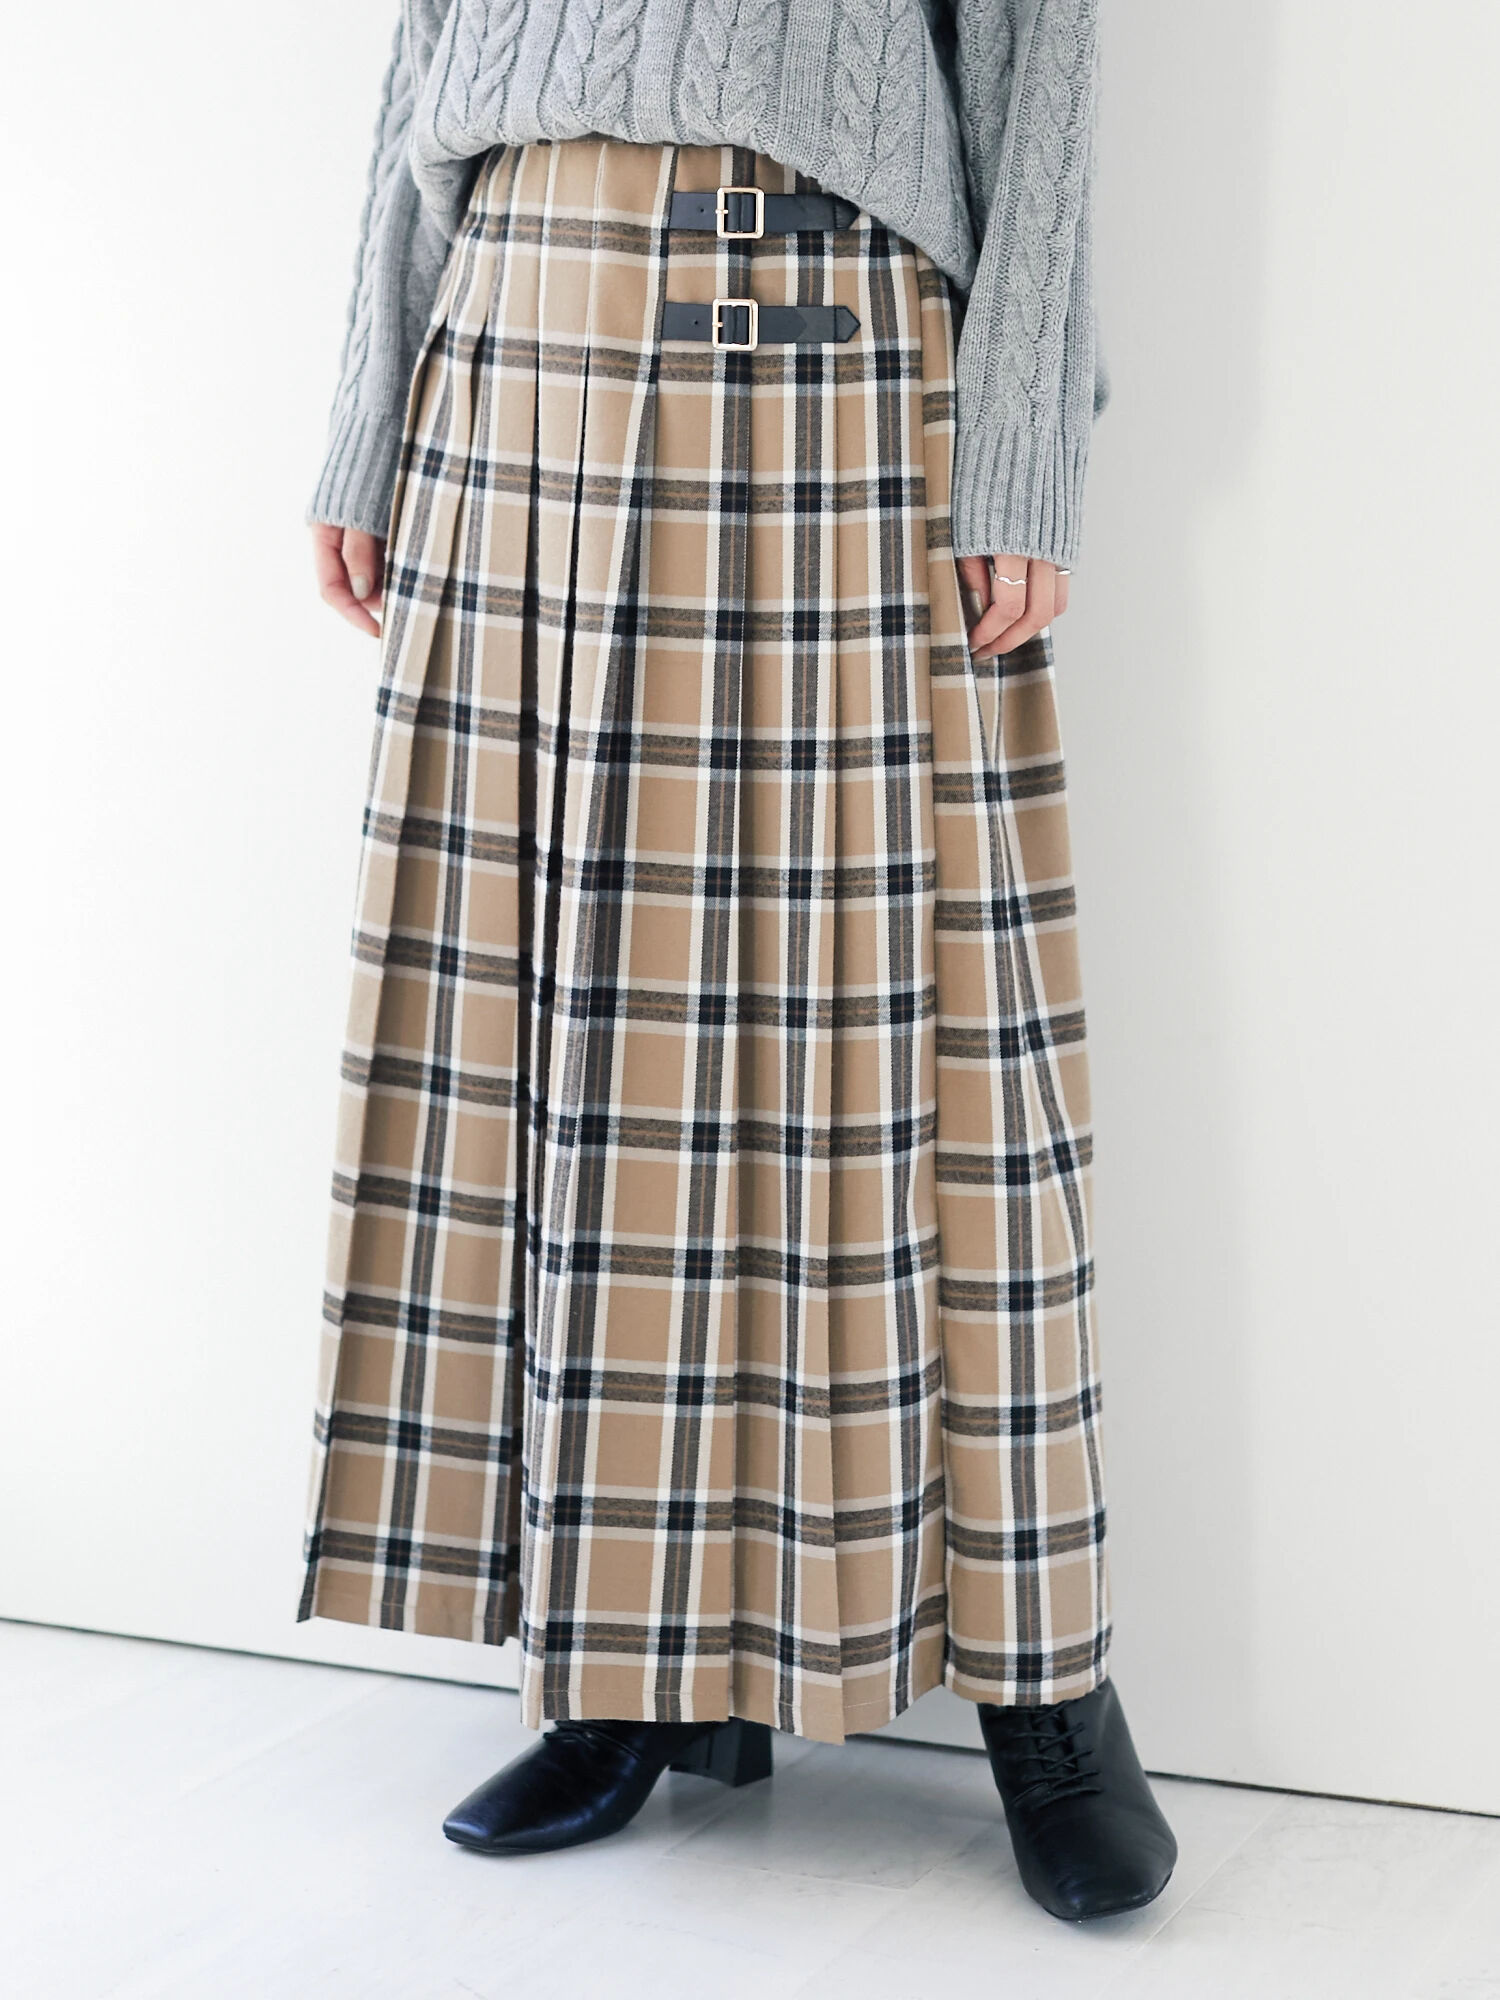 Green Parks(グリーンパークス)の・ELENCARE DUE タータンチェックキルトスカート（スカート） - ファッションレンタルのメチャカリ